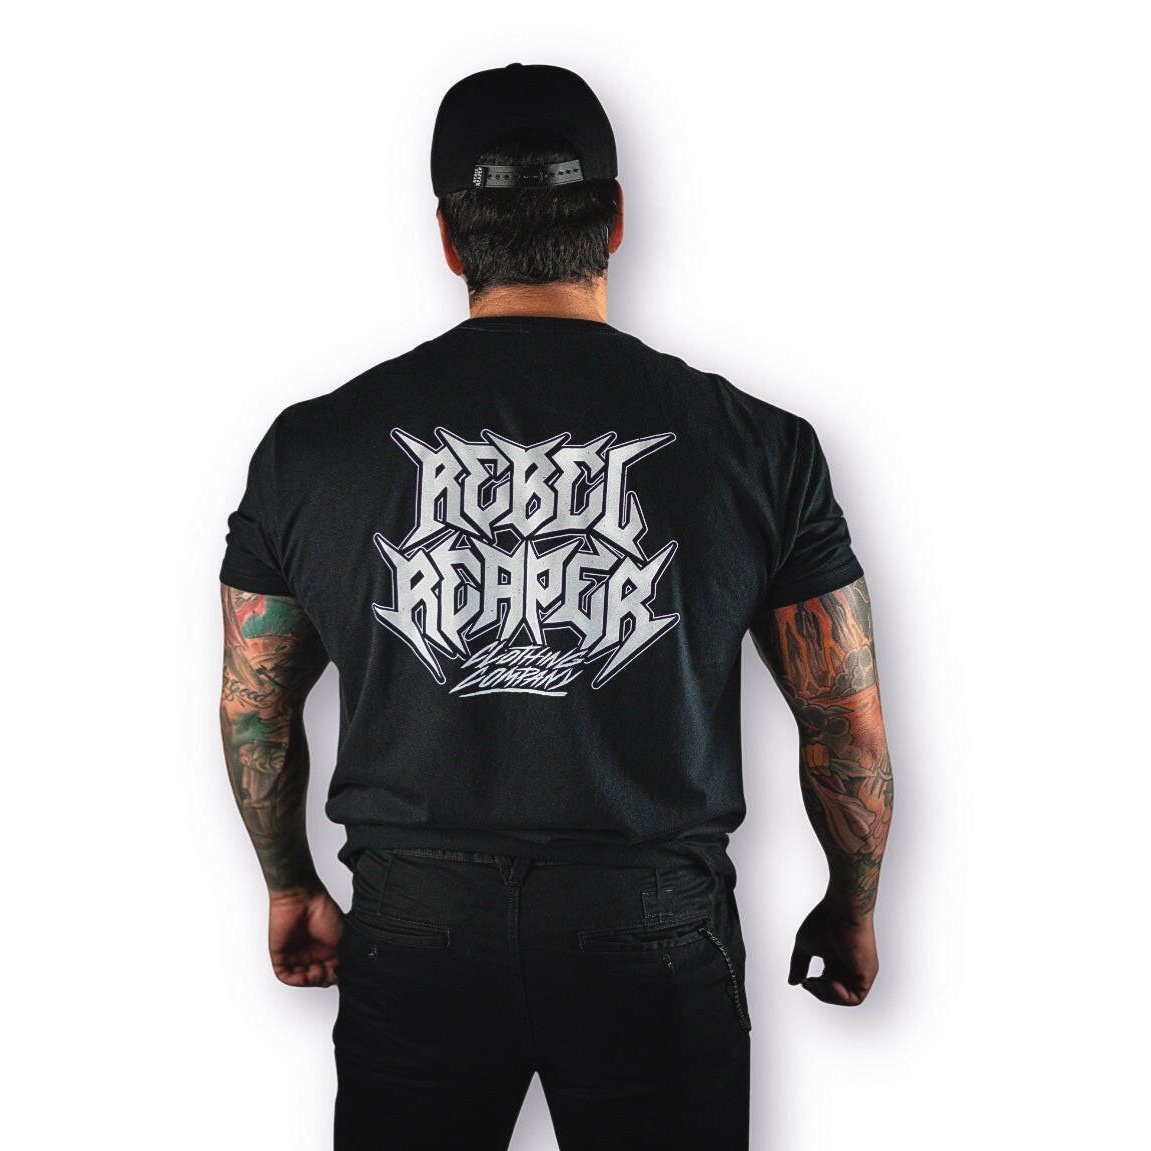 Black & White Rebel Logo T-Shirt - Rebel Reaper Clothing Company T-Shirt